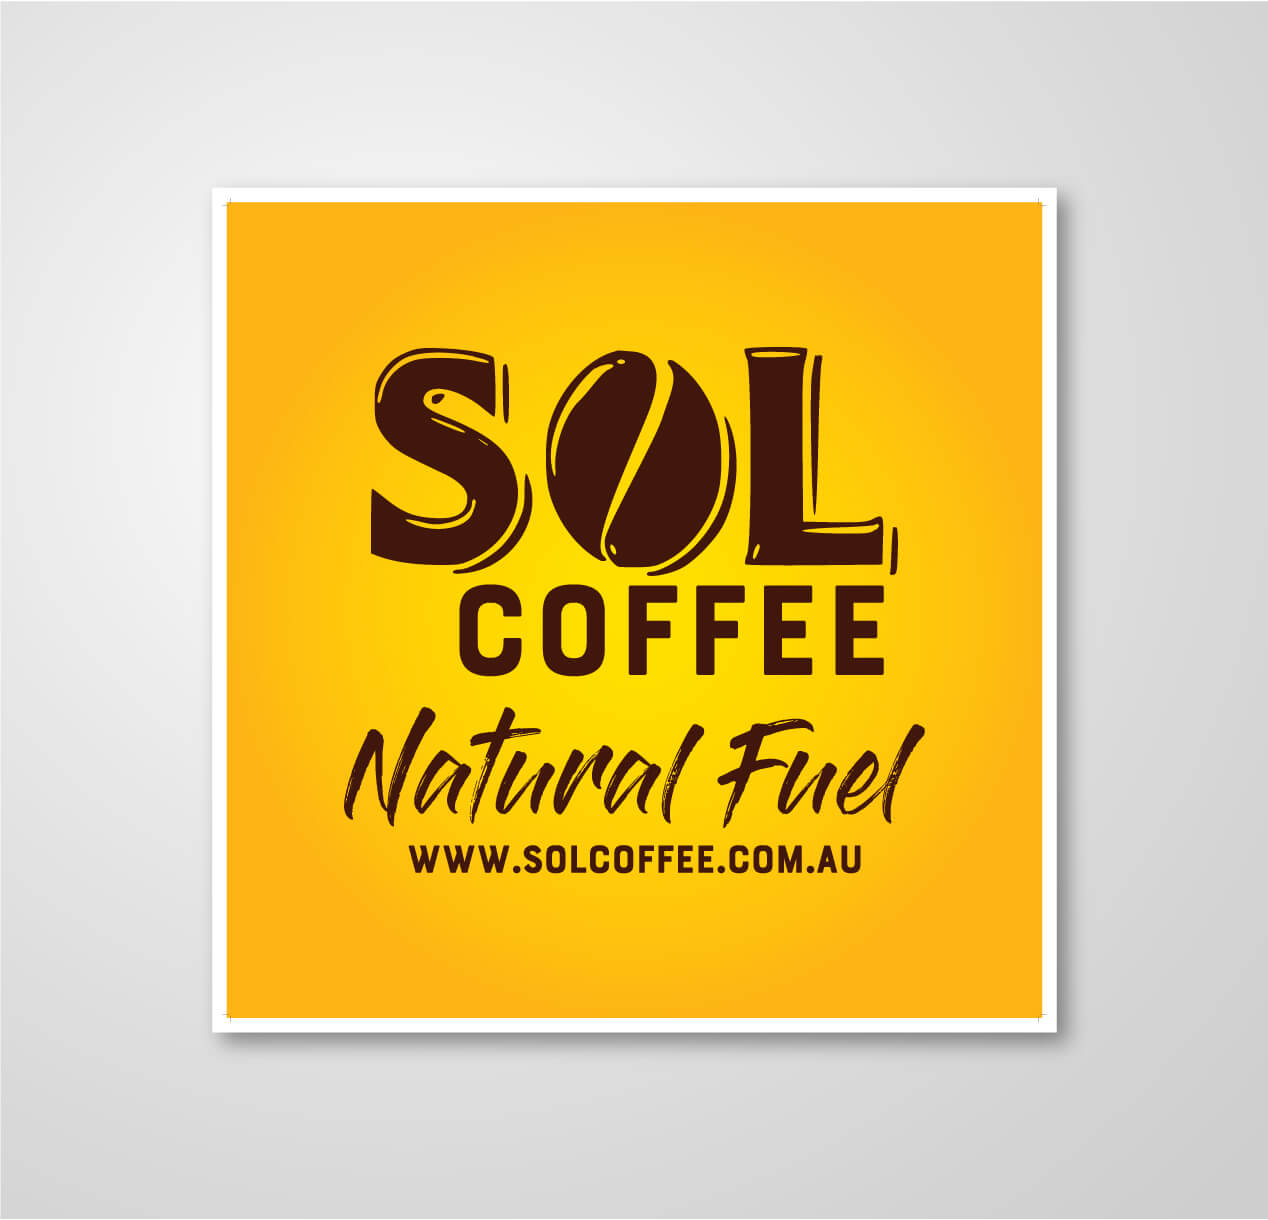 Sol coffee